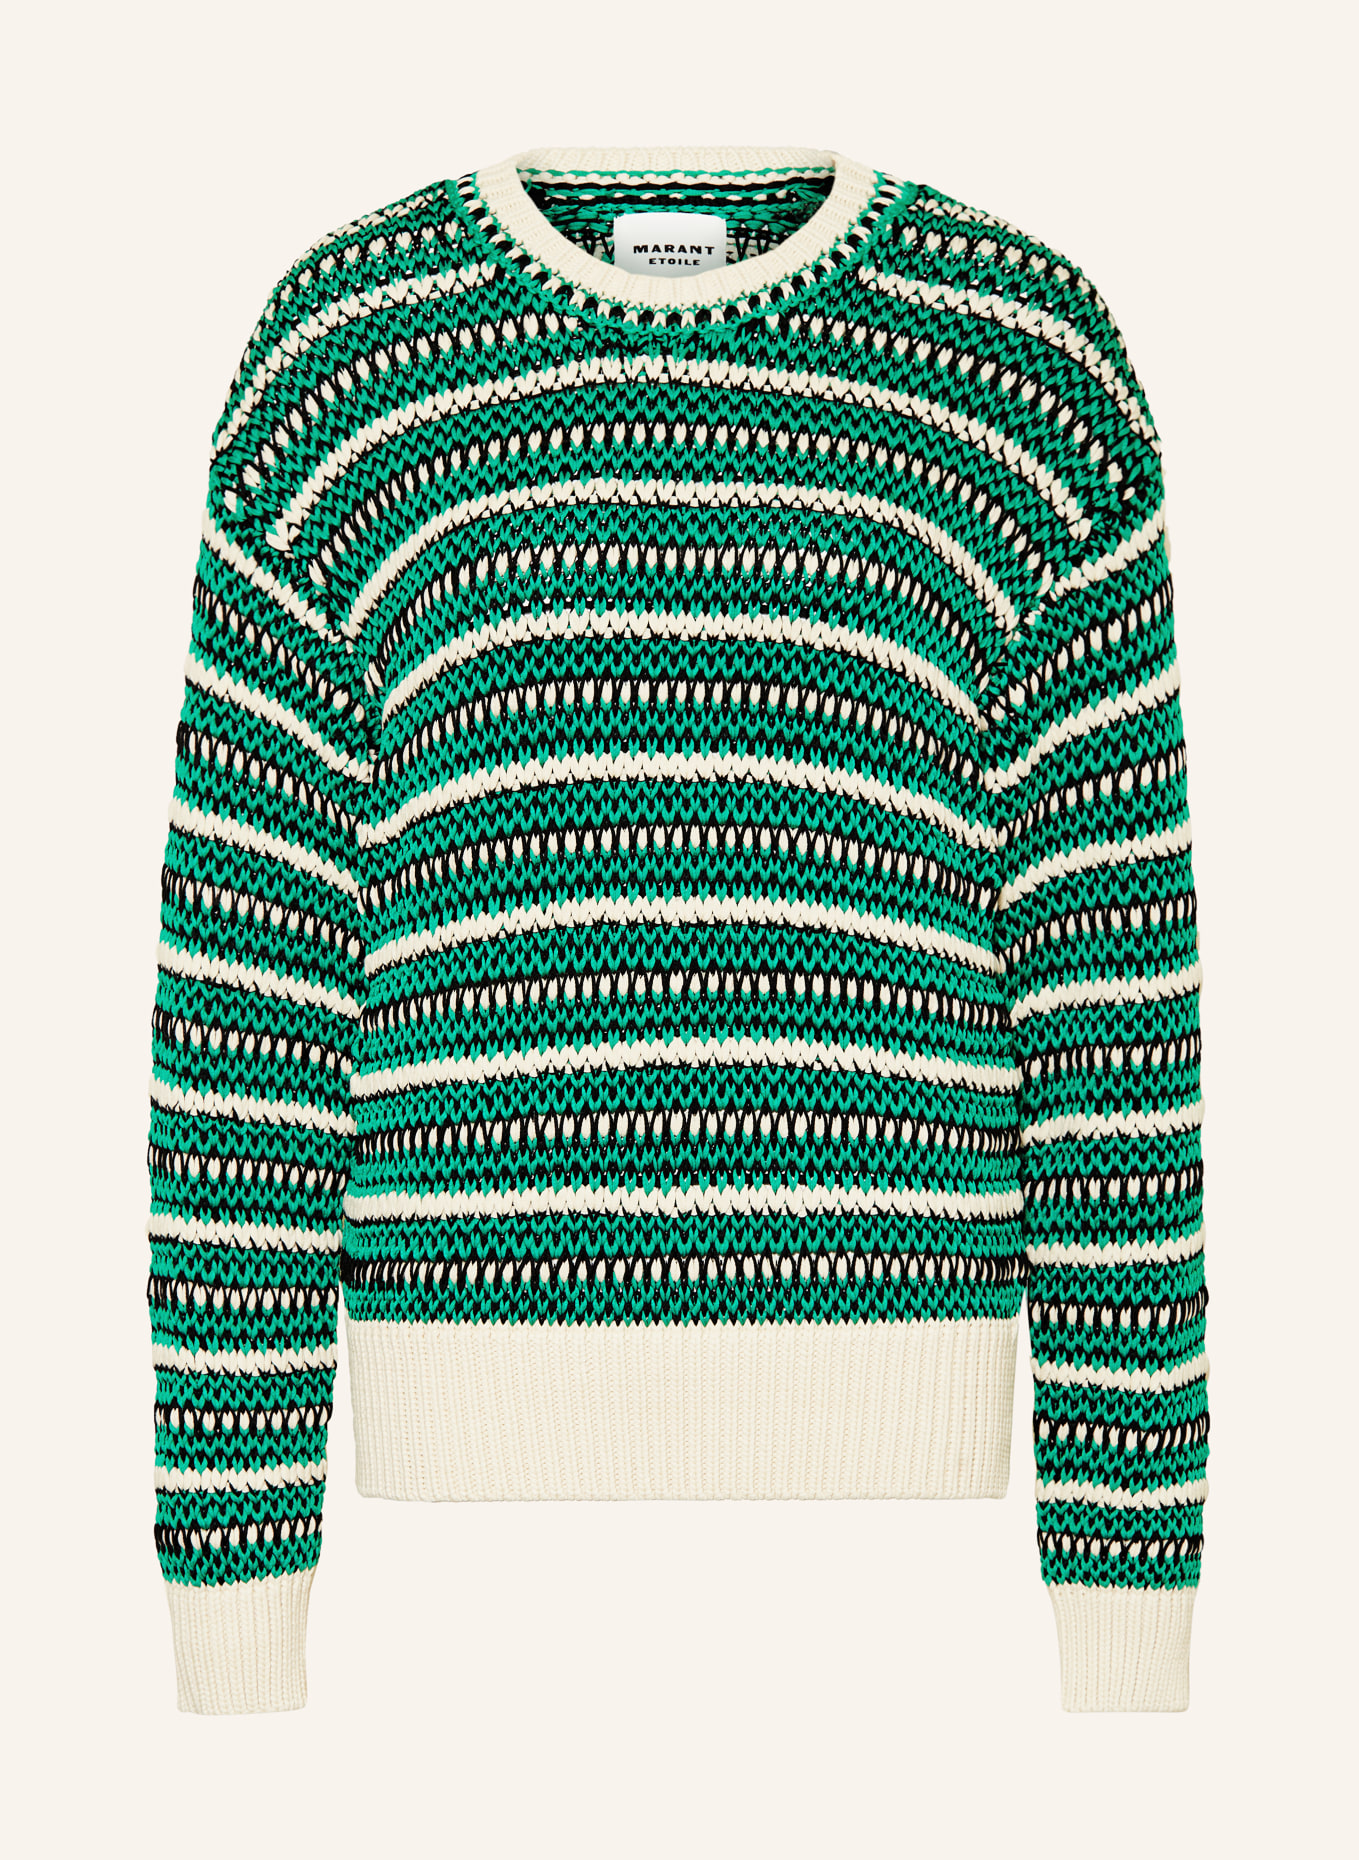 MARANT ÉTOILE Pullover HILO, Farbe: GRÜN/ WEISS (Bild 1)